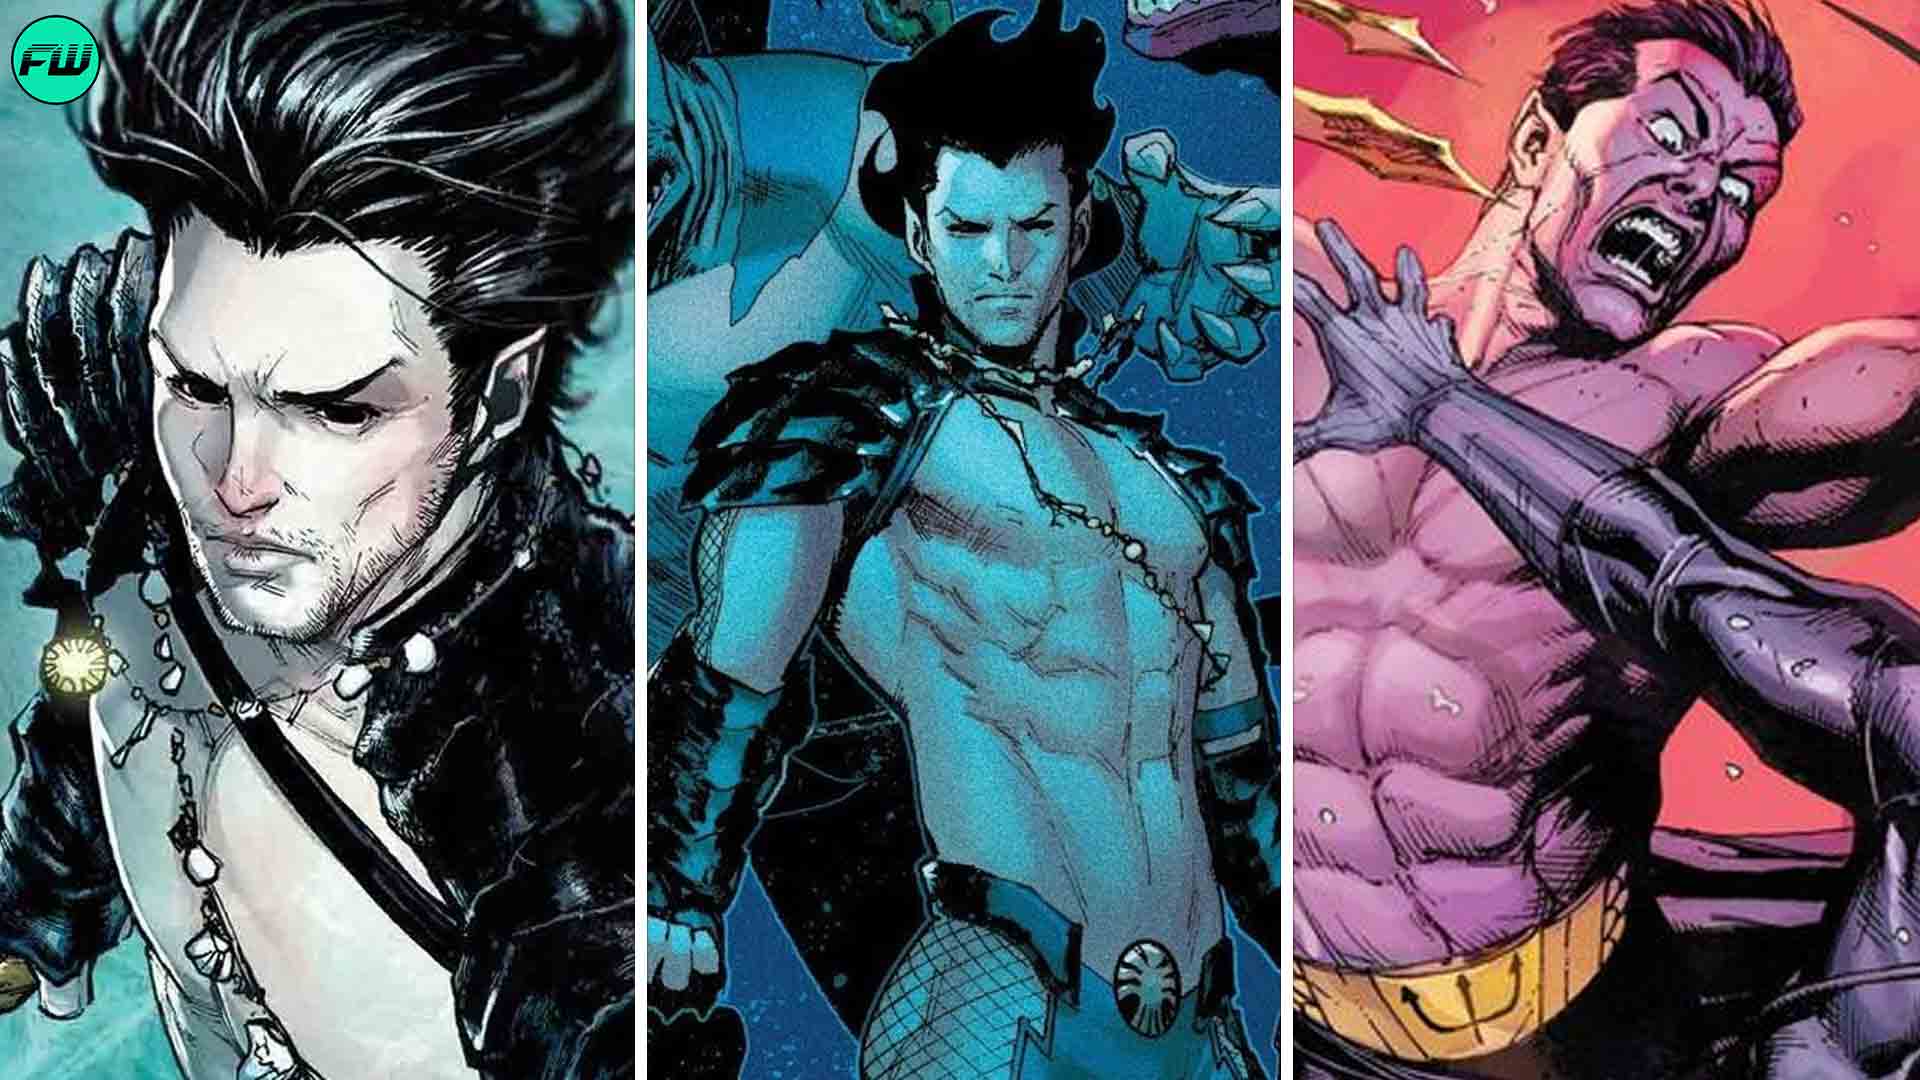 Namor Marvel Superhero Wallpapers